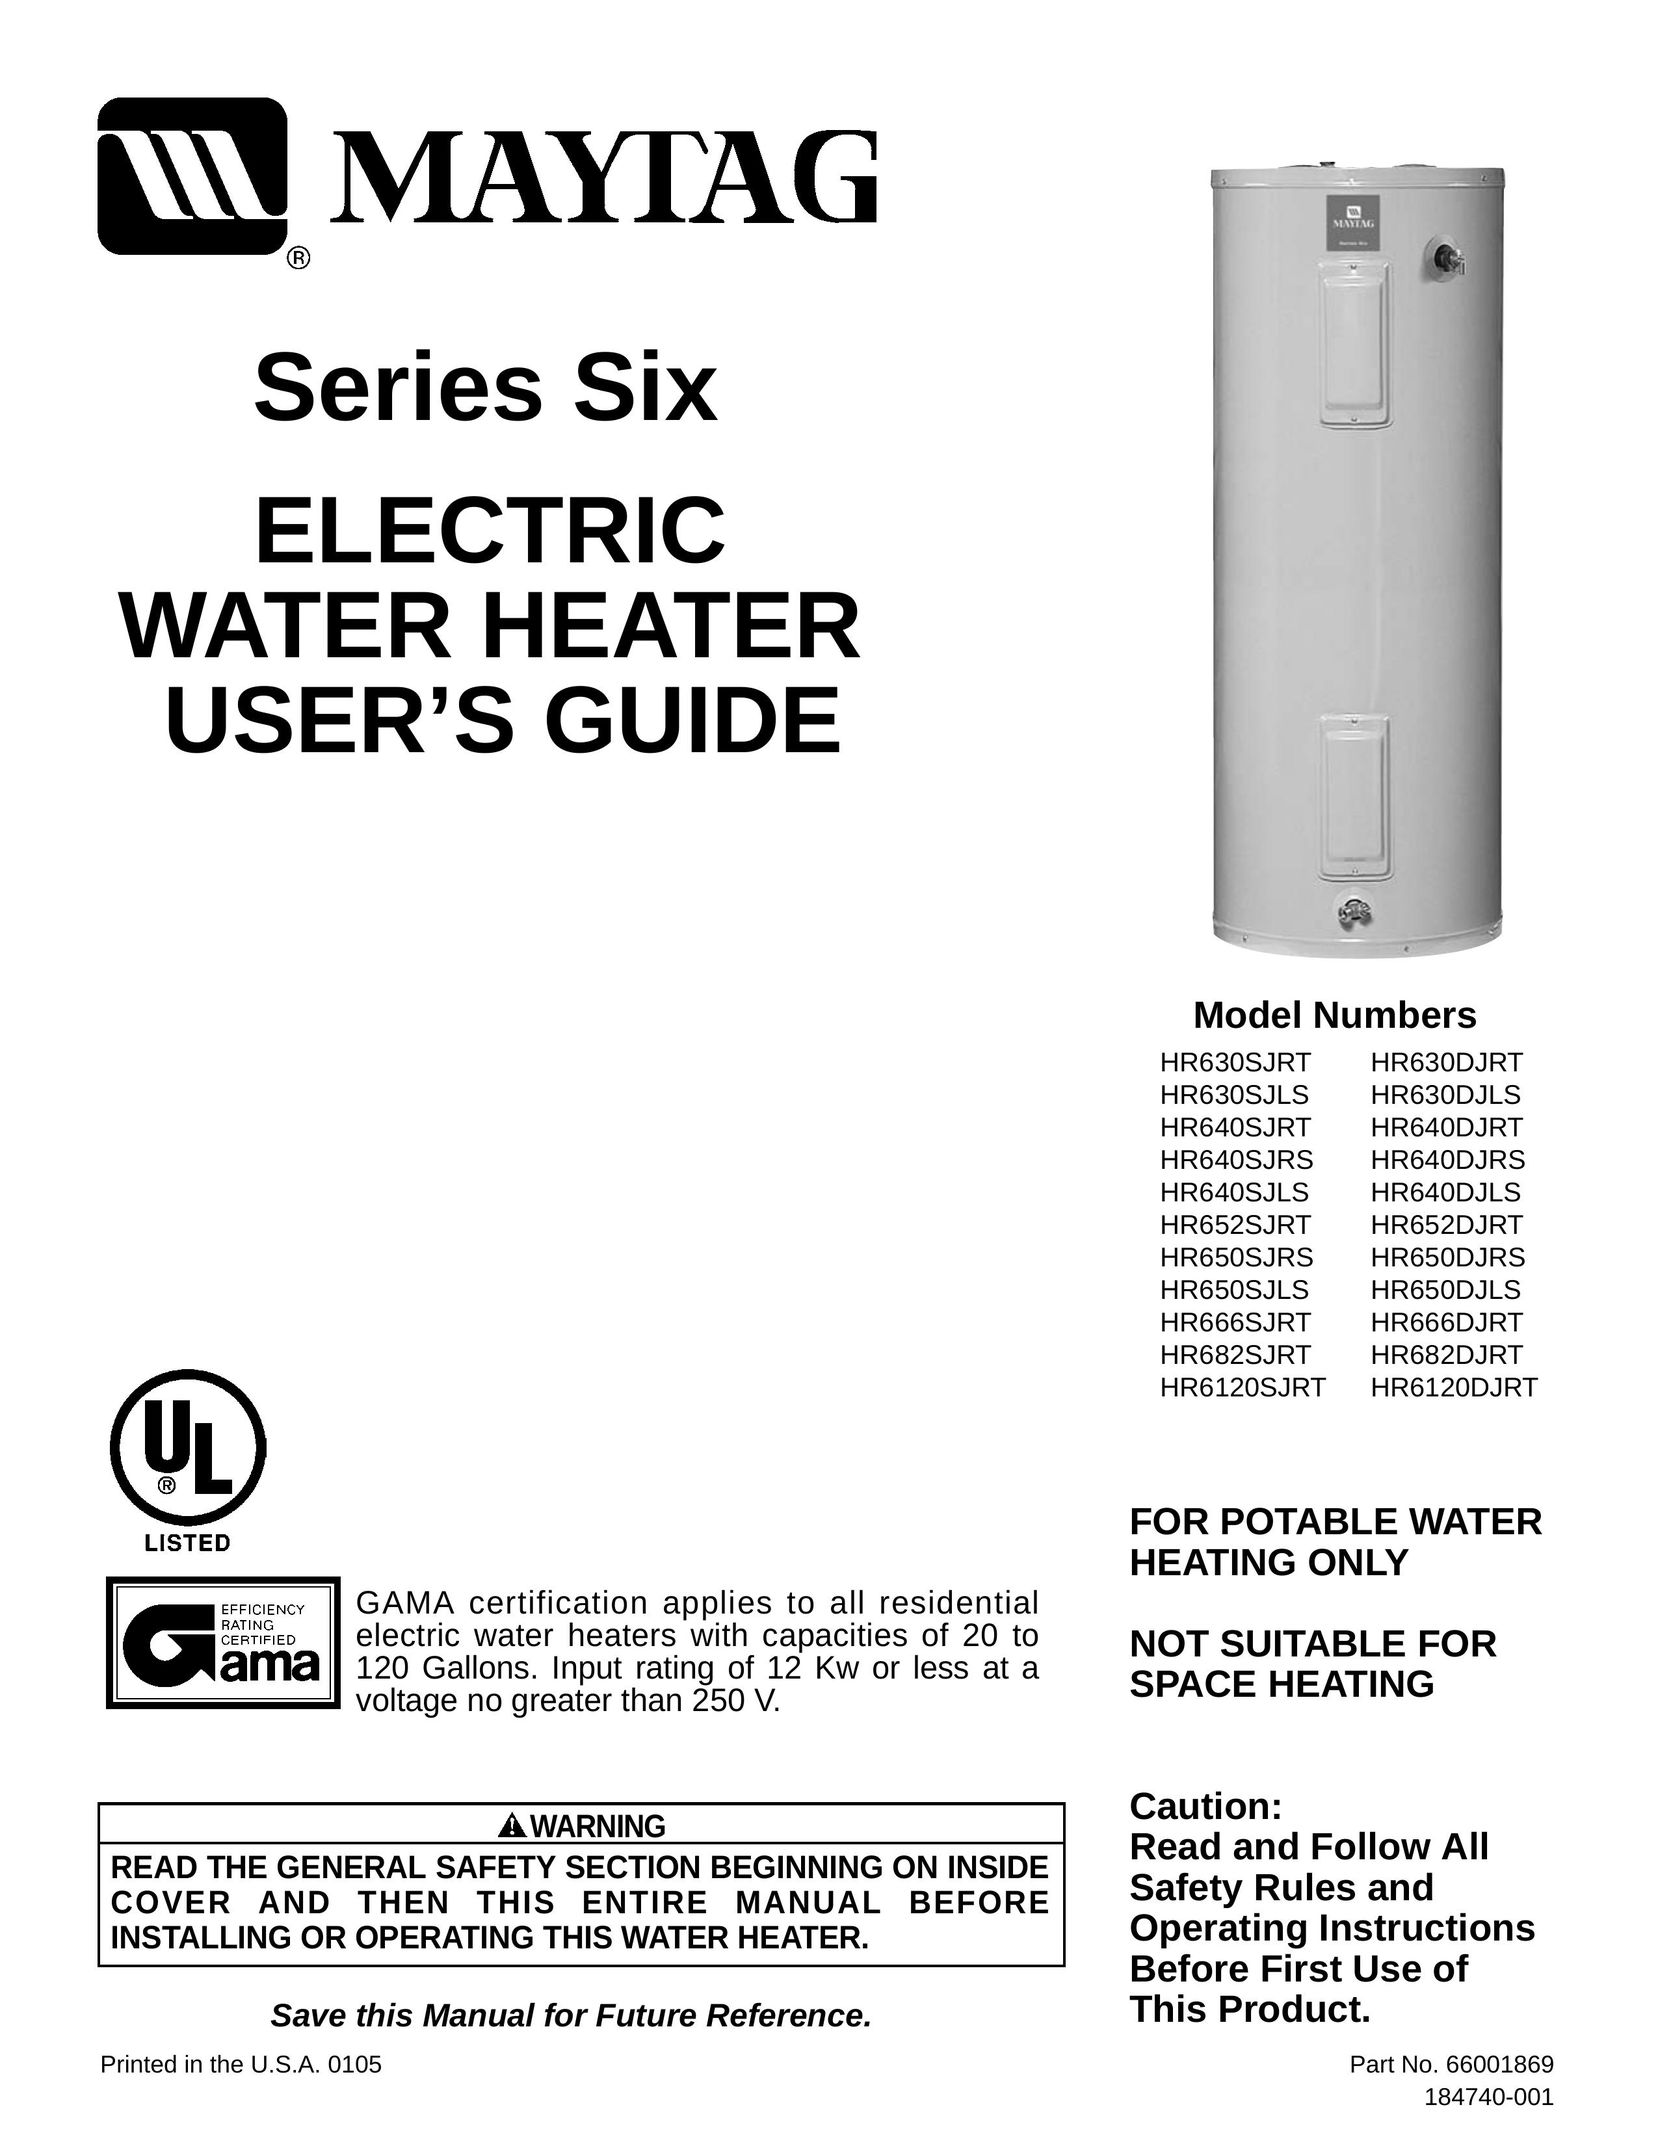 Maytag HR6120DJRT Water Heater User Manual